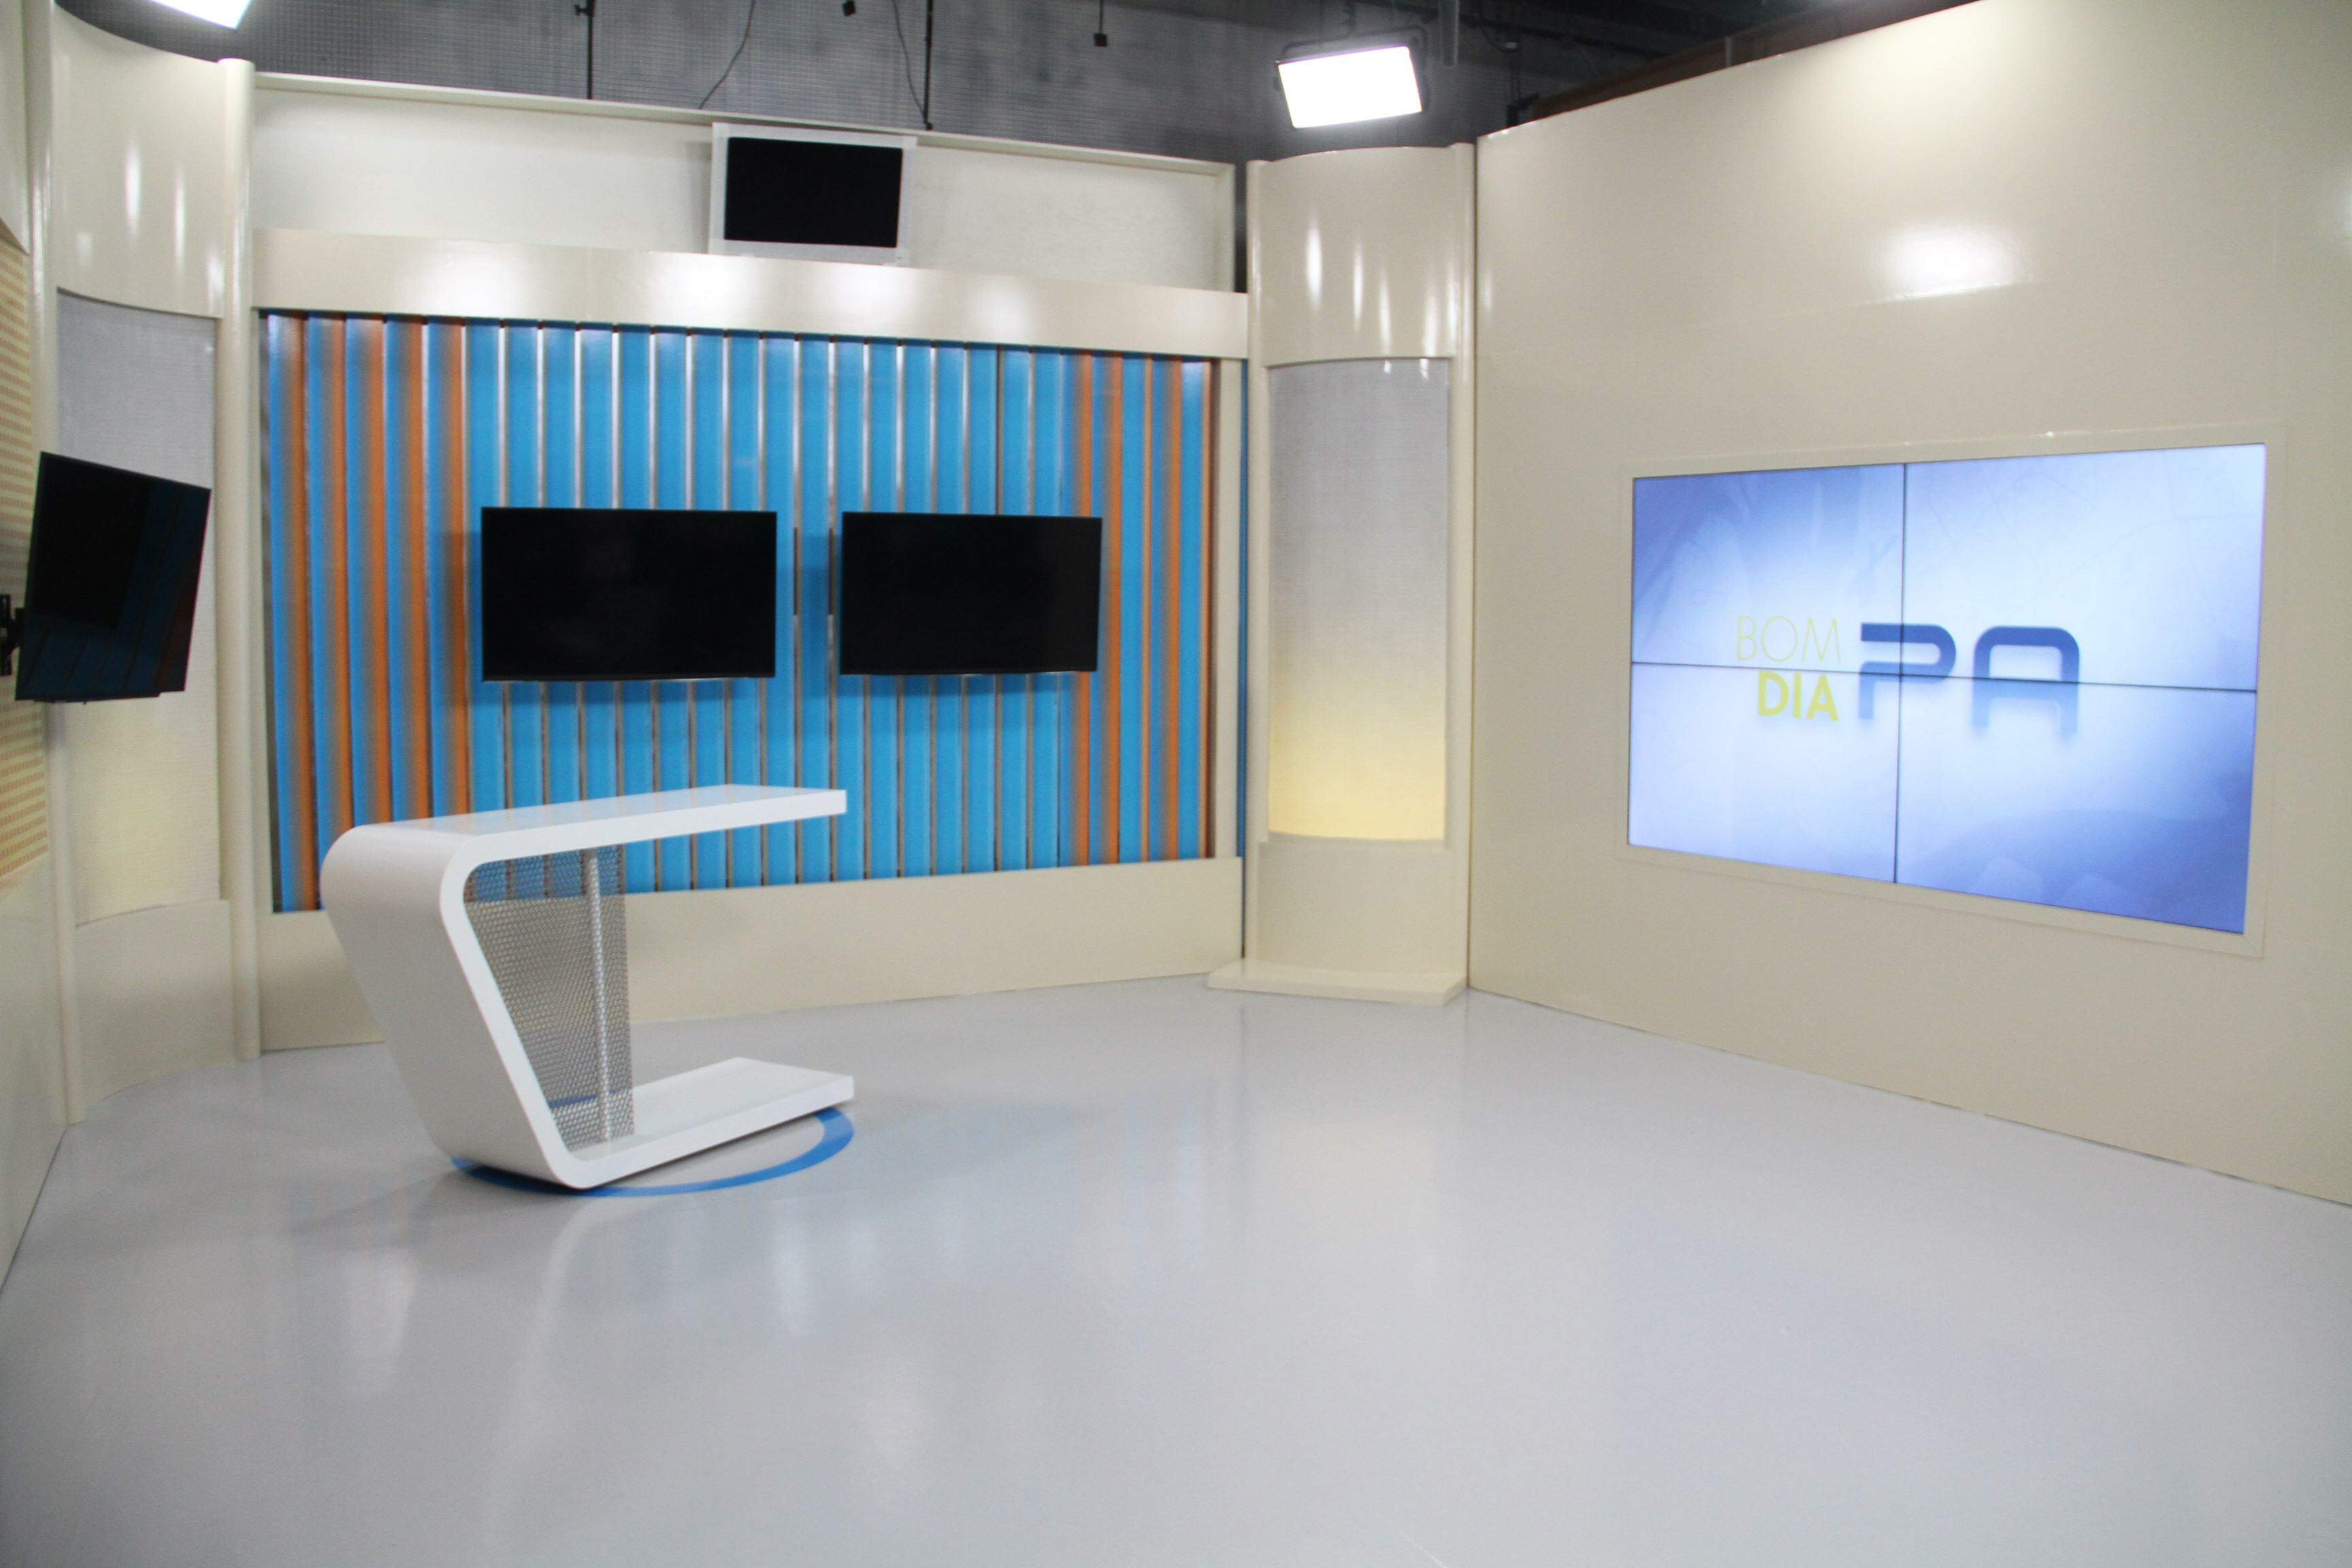 TV Liberal apresenta novo estúdio nesta segunda-feira | Belém | O Liberal